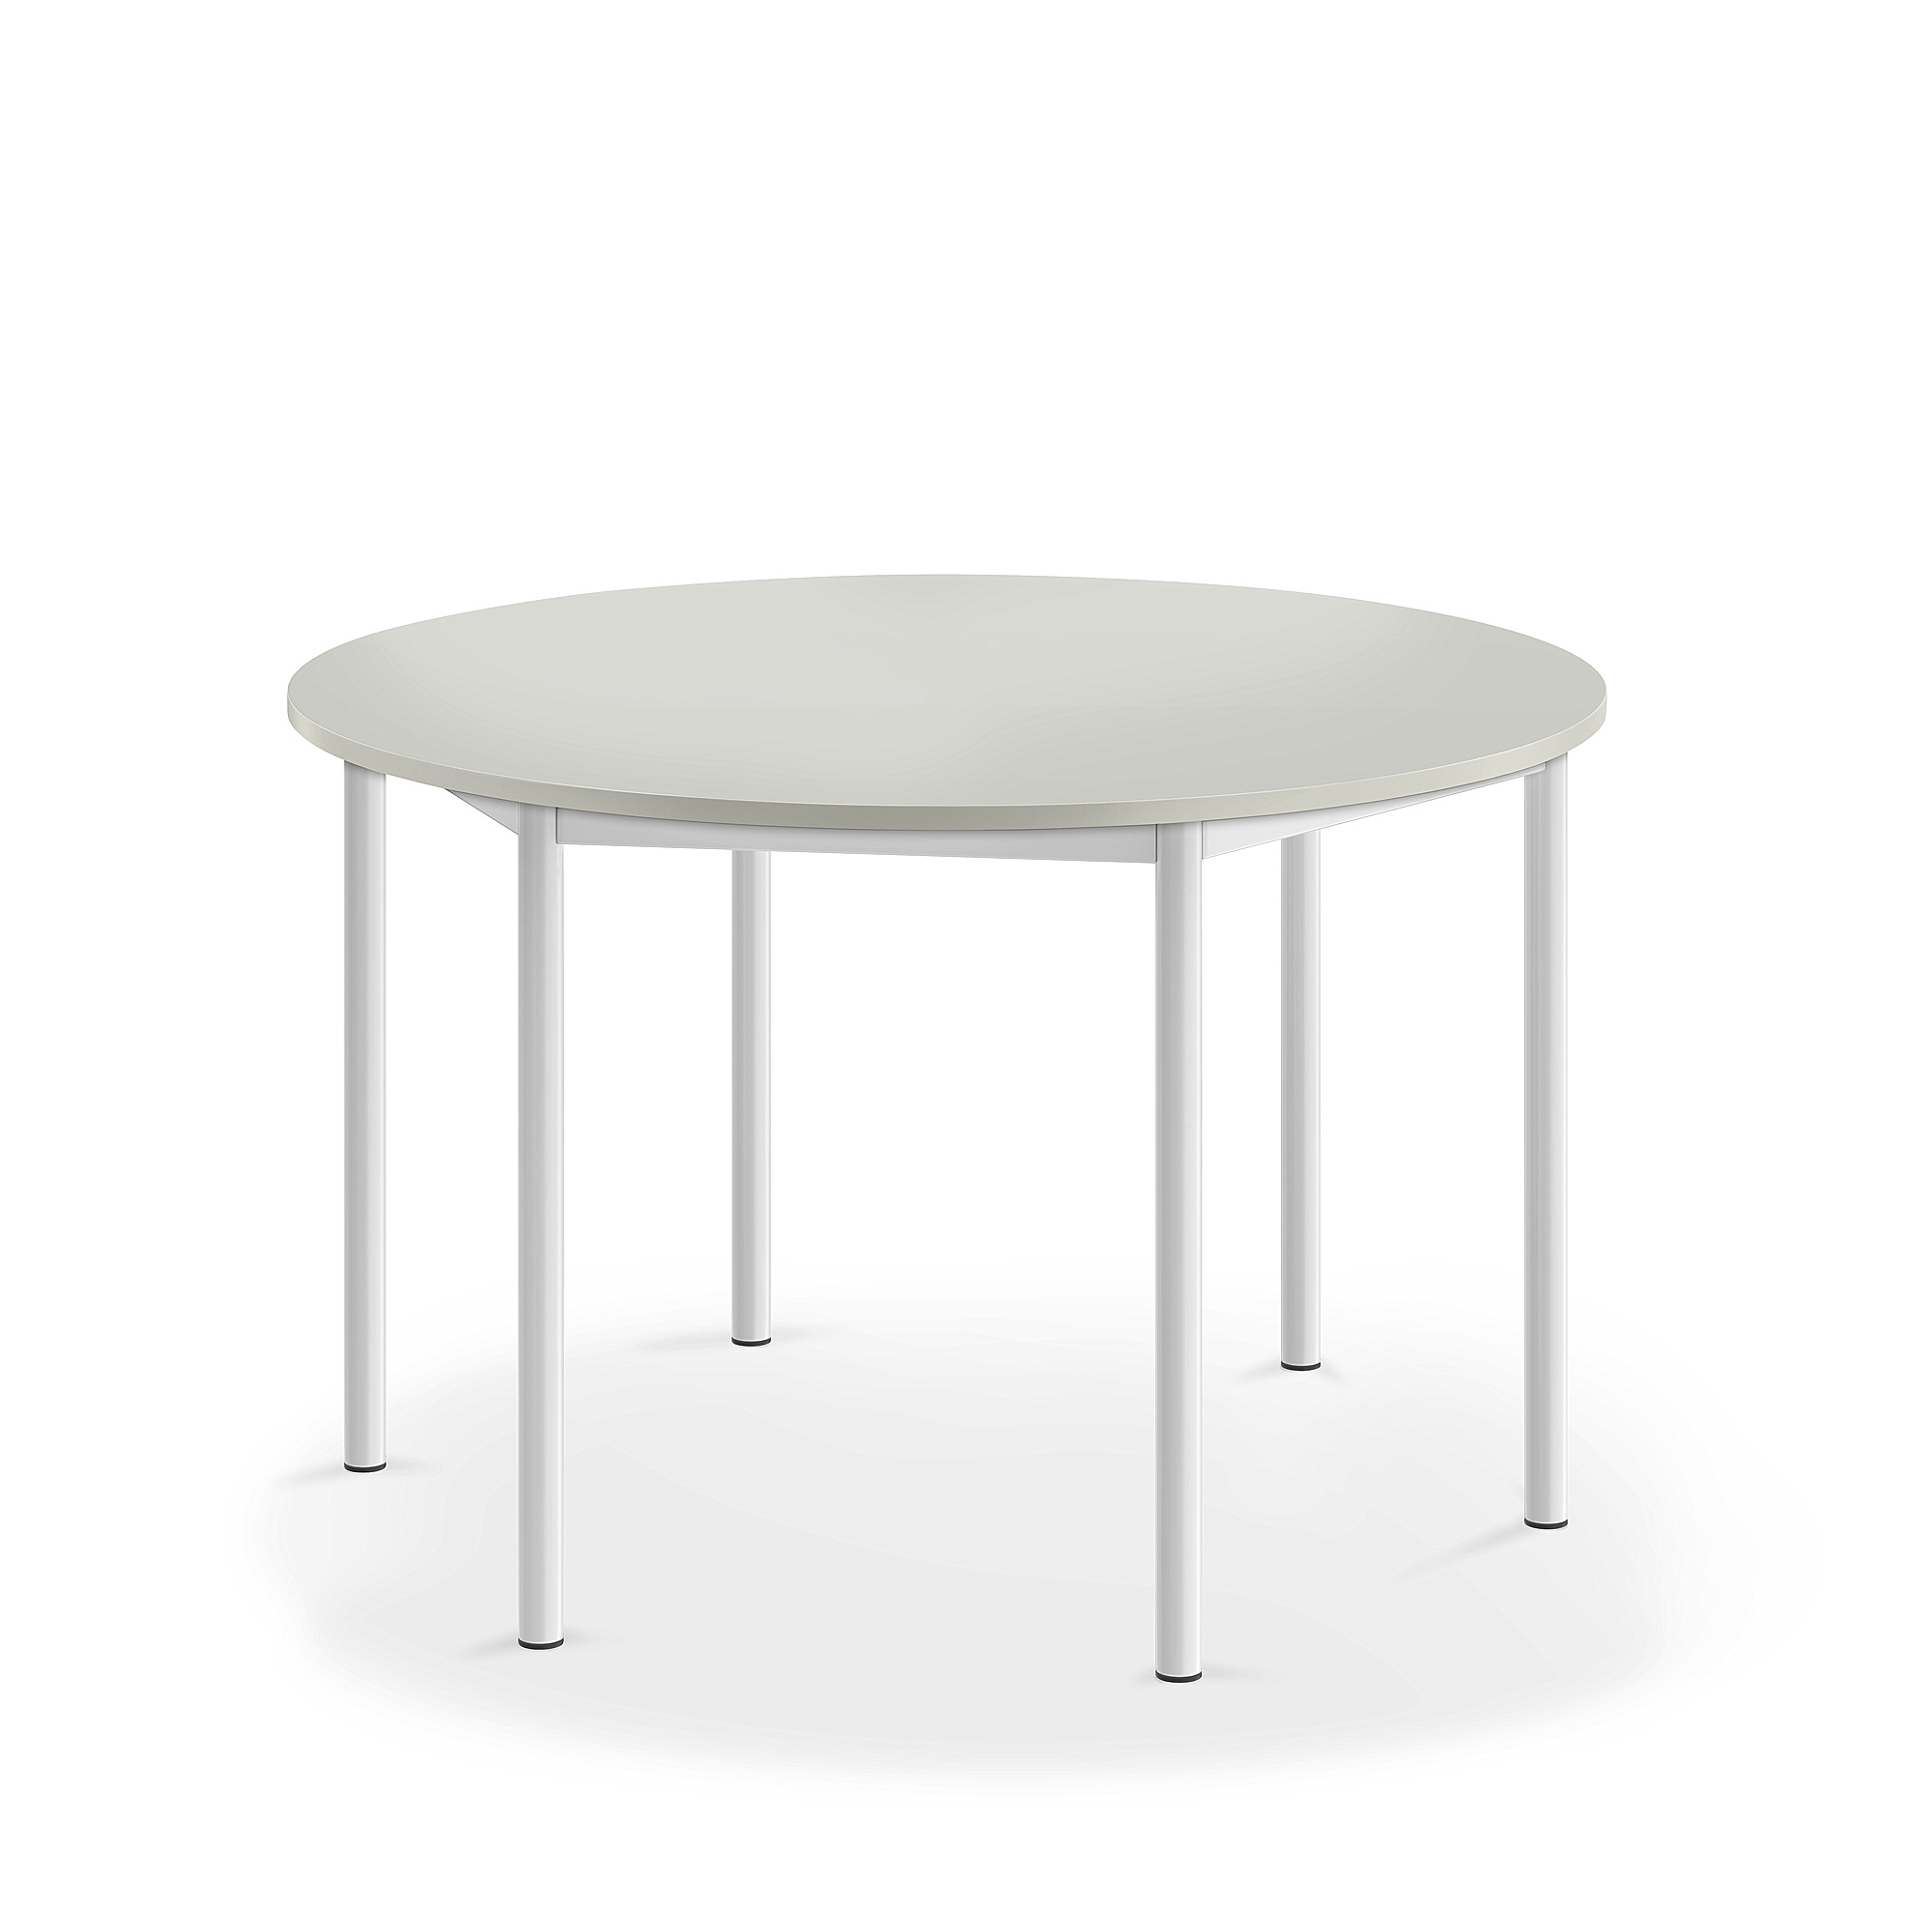 Stůl BORÅS, Ø1200x720 mm, bílé nohy, HPL deska, šedá